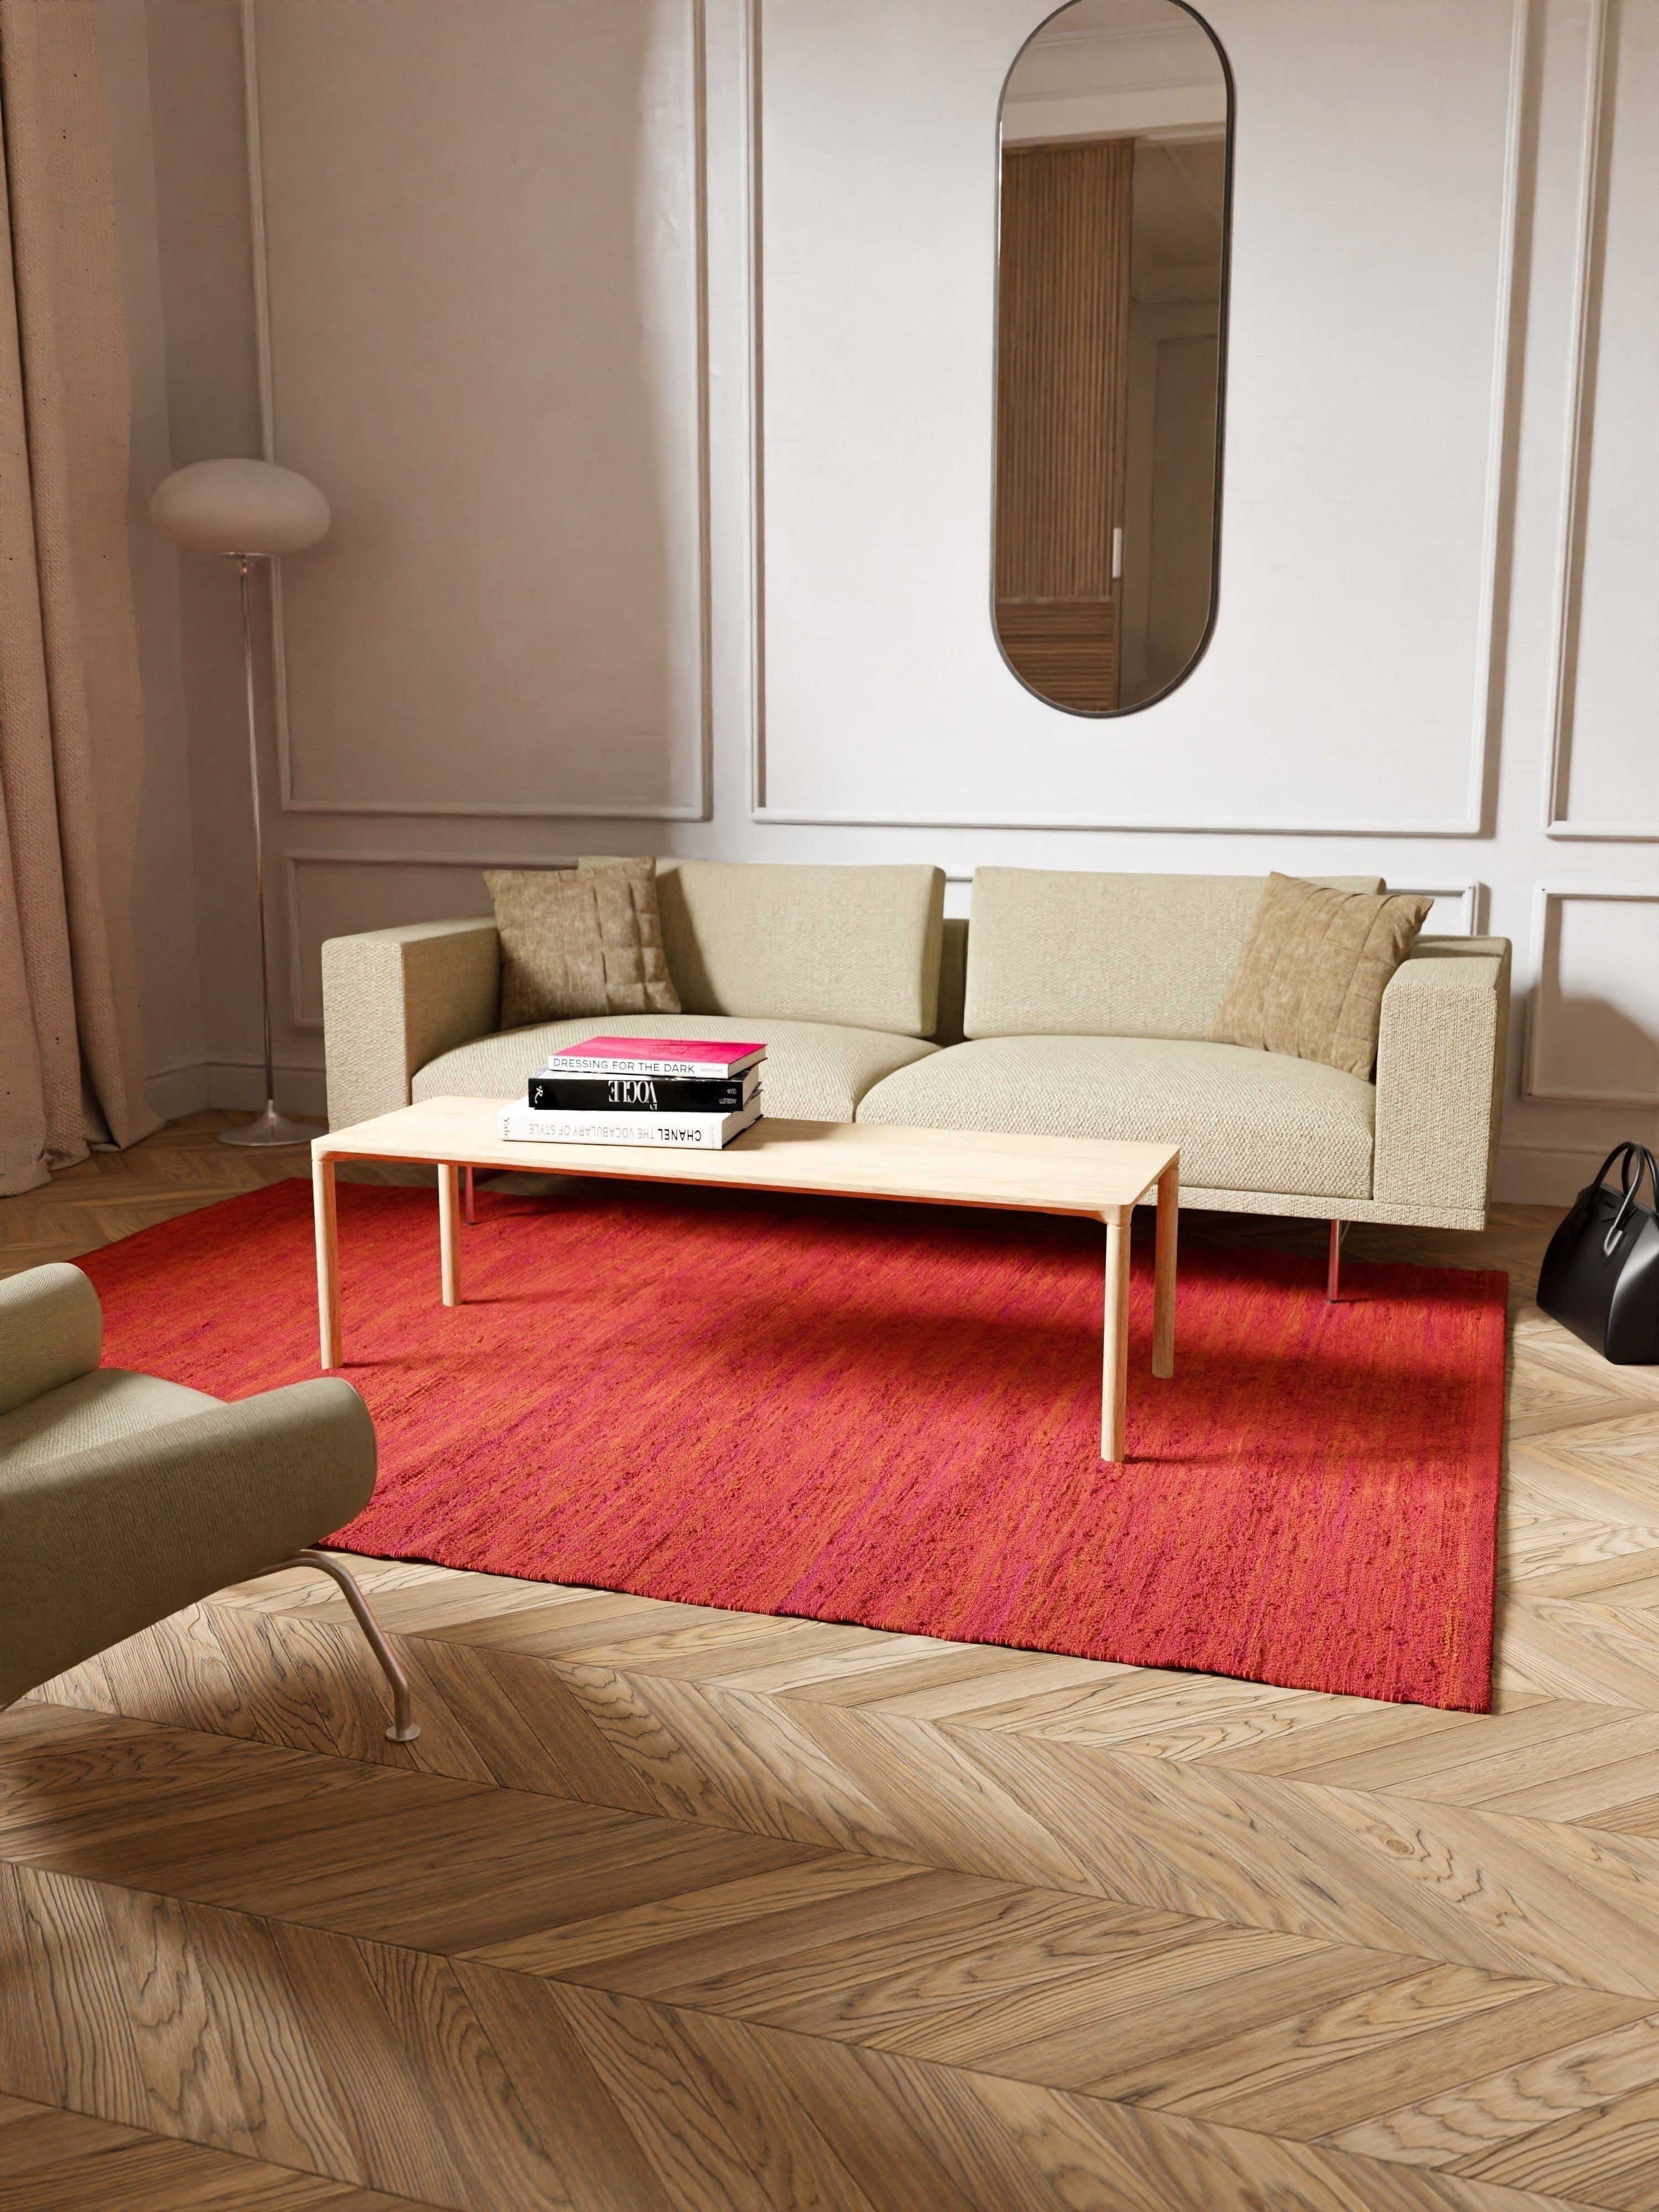 Koberečka s pevným bavlněným koberec 60 x 90 cm, jahoda